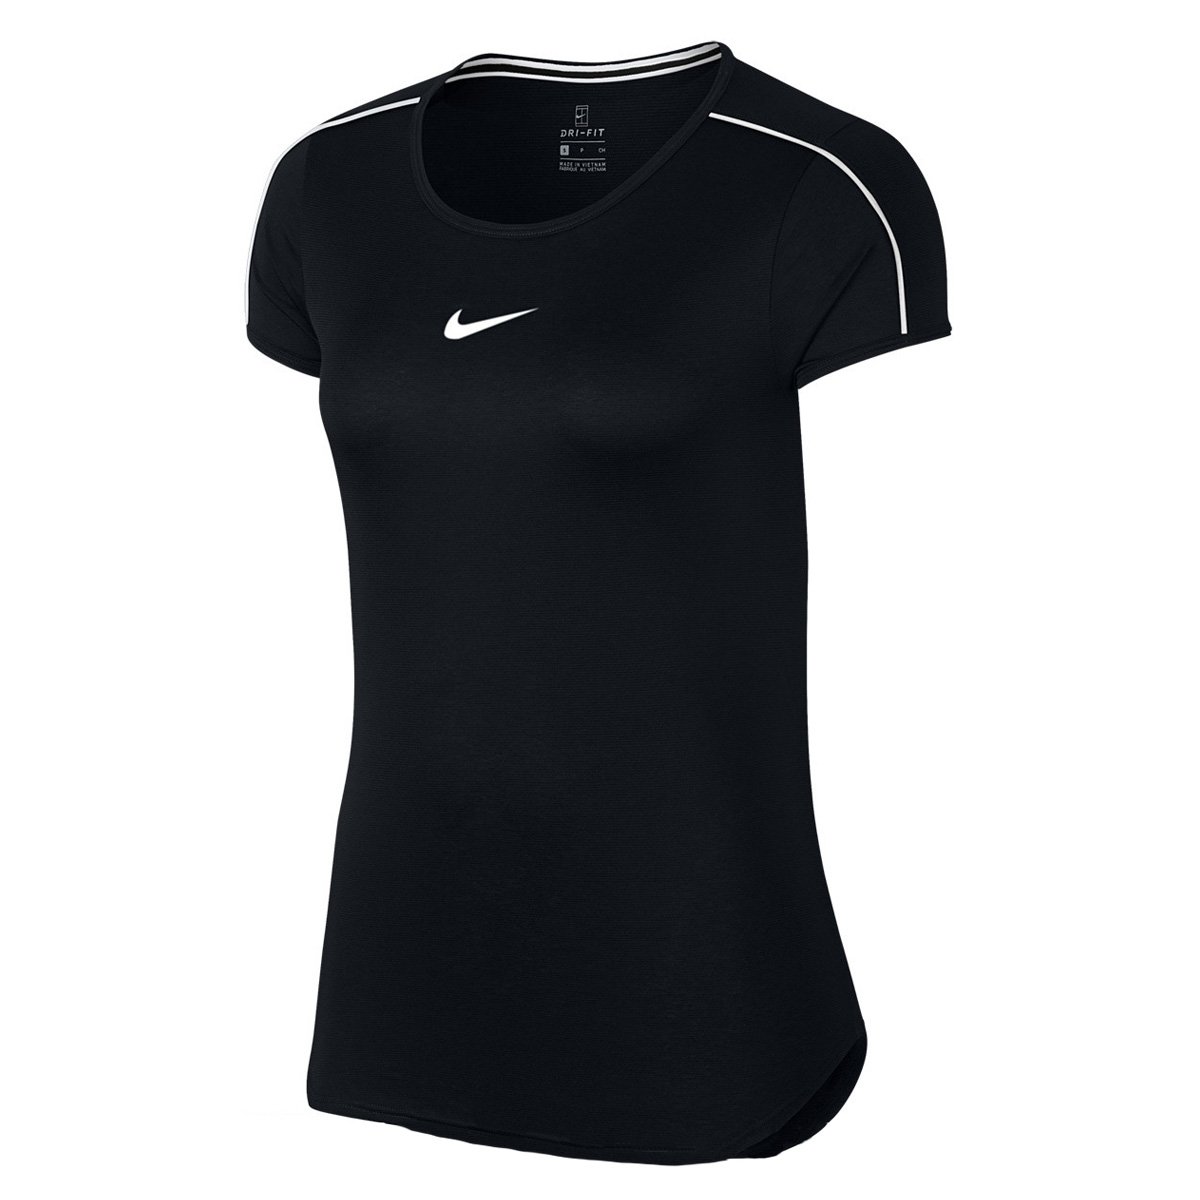 Camiseta Nike Pro Dri-fit Preto